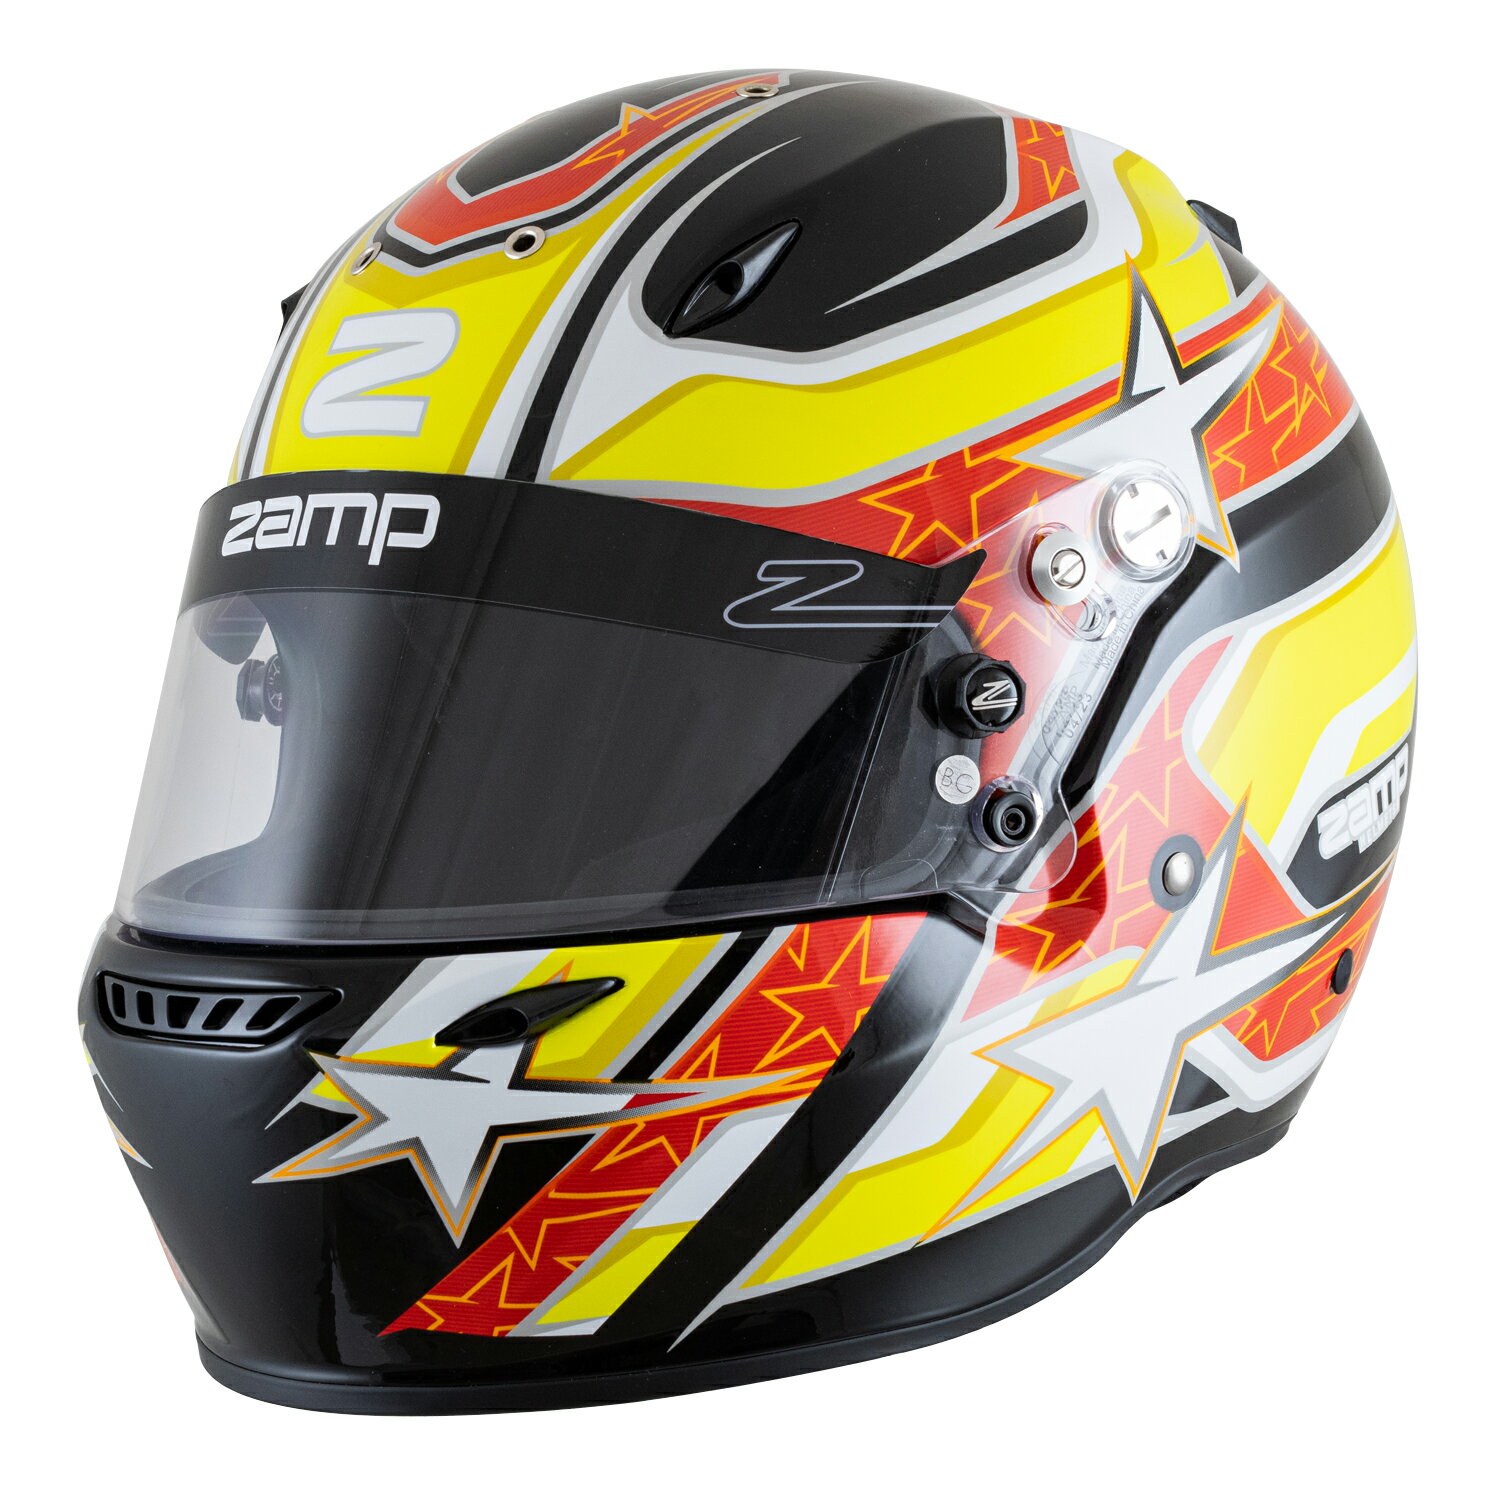 Zamp Helmet ZR-72 Graphic Gloss Black/Yellow/Orange グロス ブラック/イエロー/オレンジ グラフィック Snell SA2020 / FIA 8859-201..